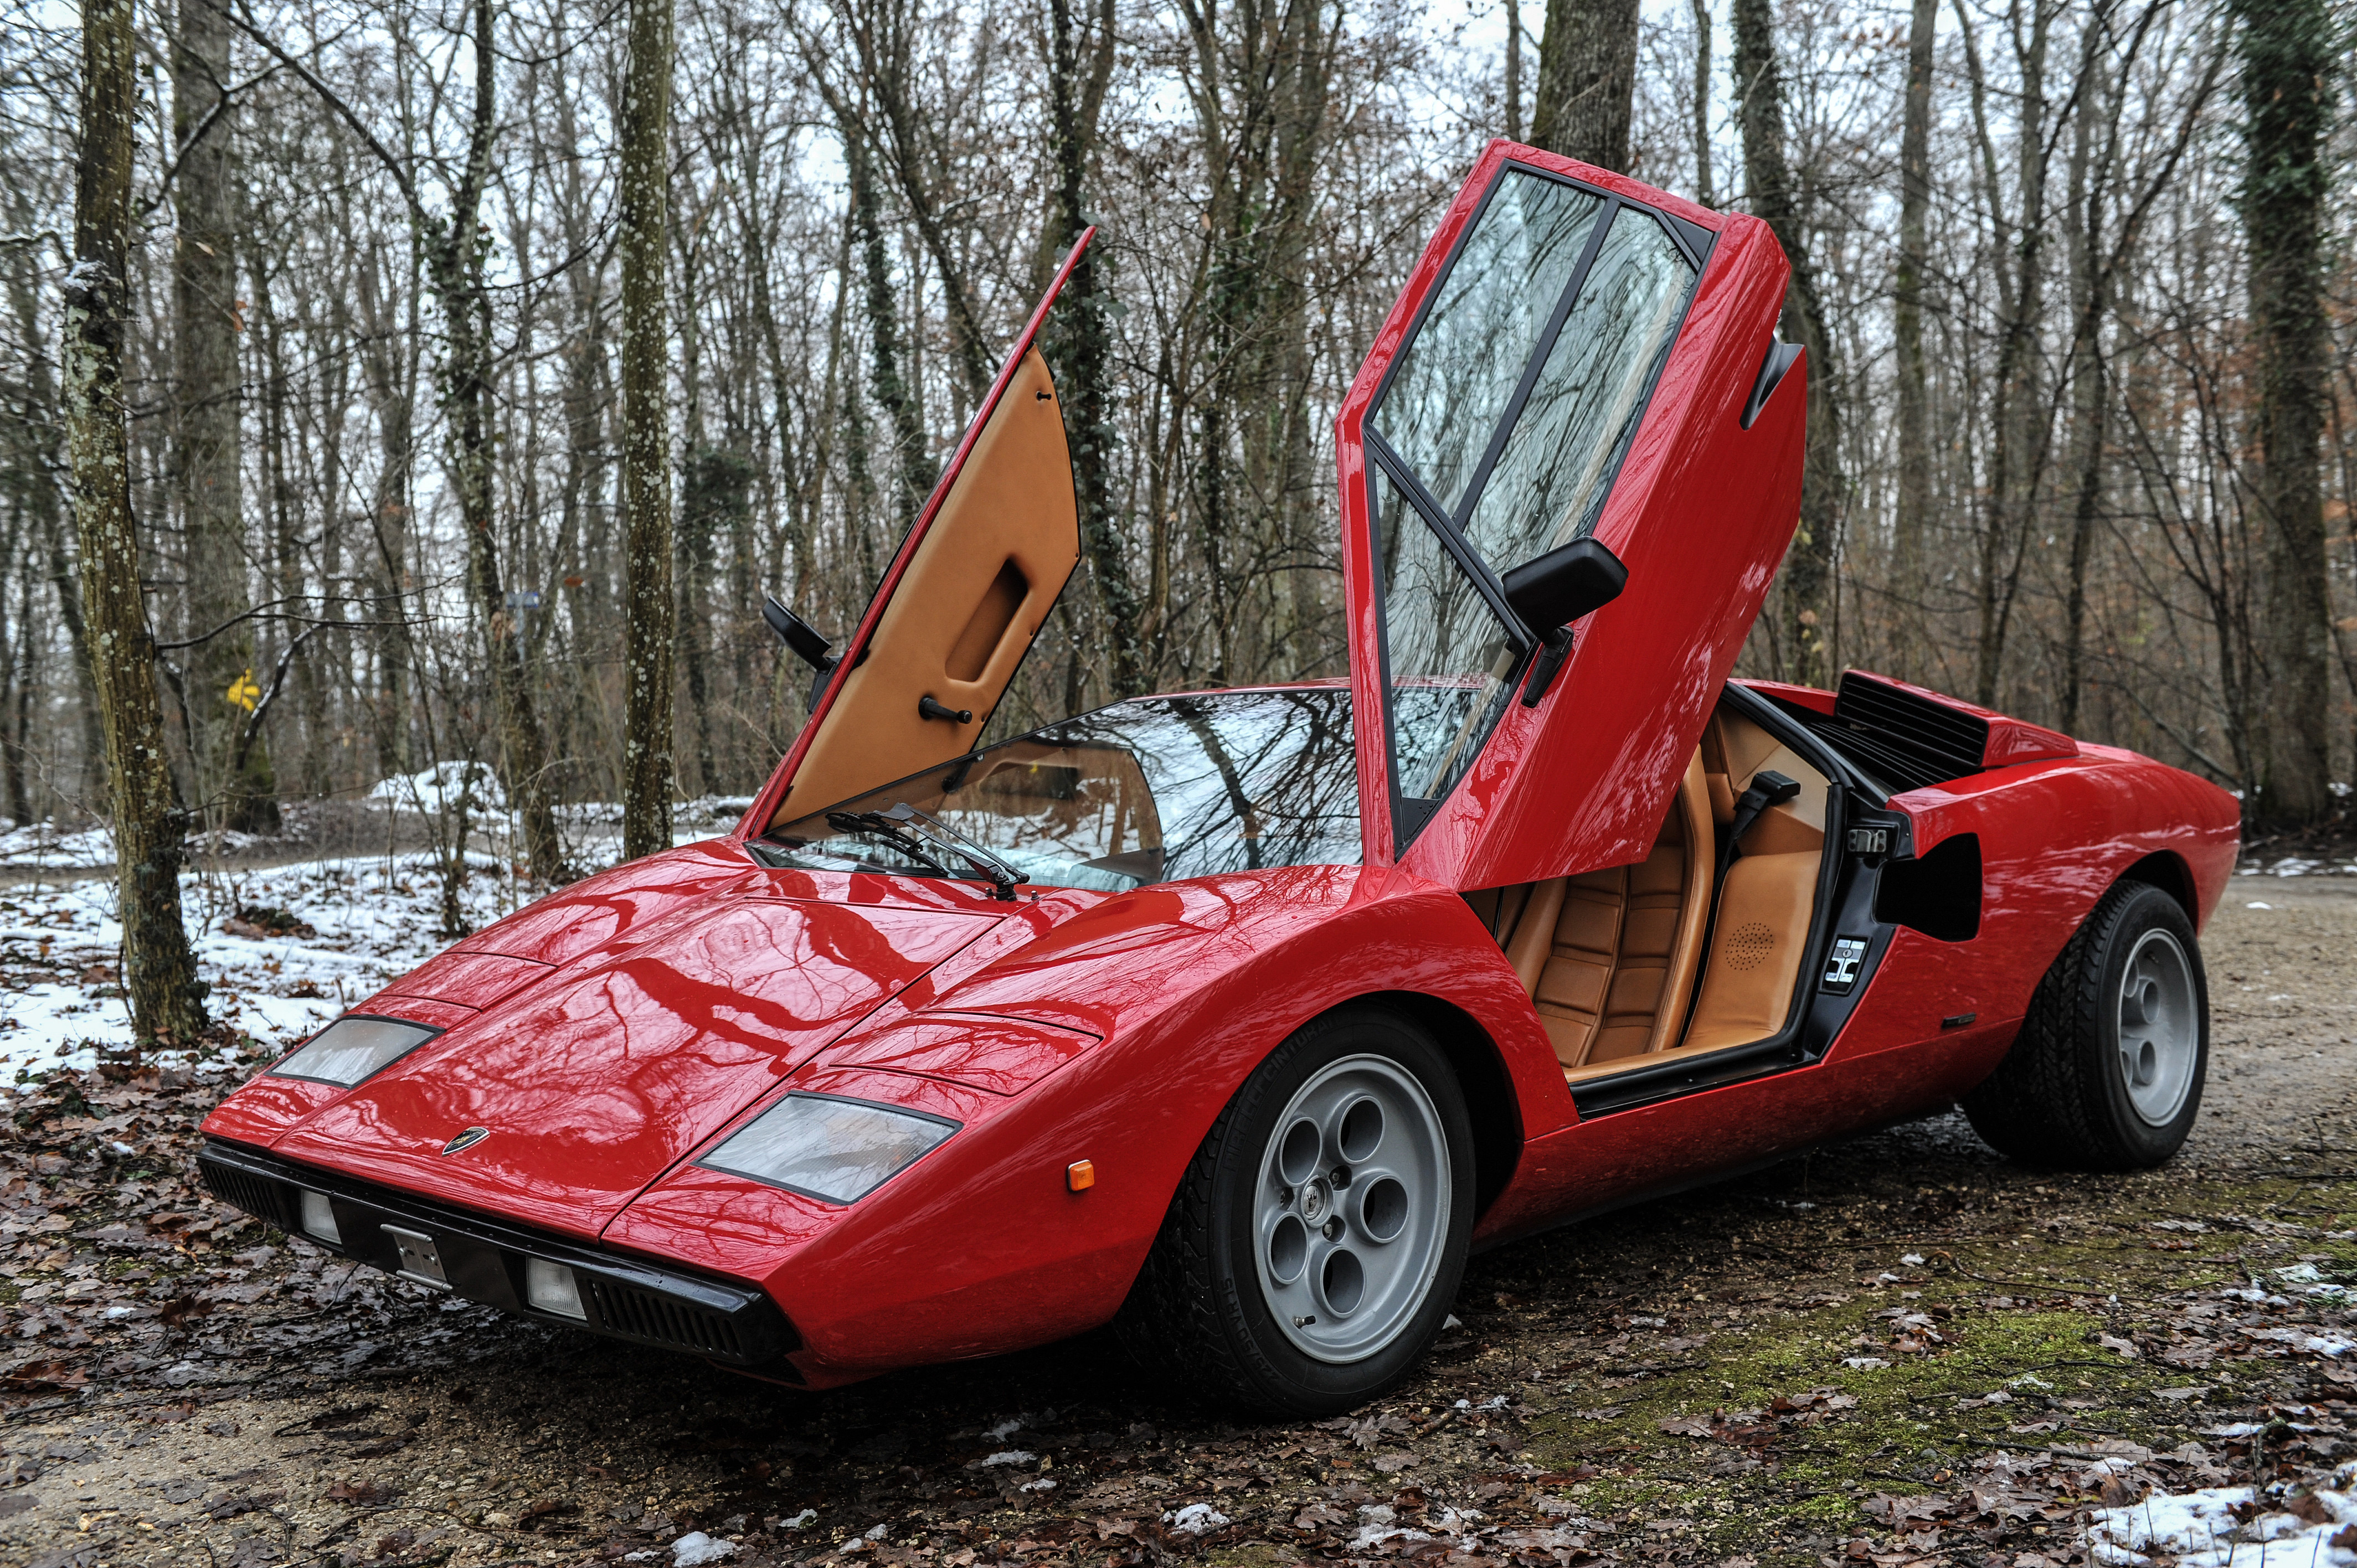 Bonhams, Bonhams boasts of Lamborghini lineup for its Paris auction, ClassicCars.com Journal